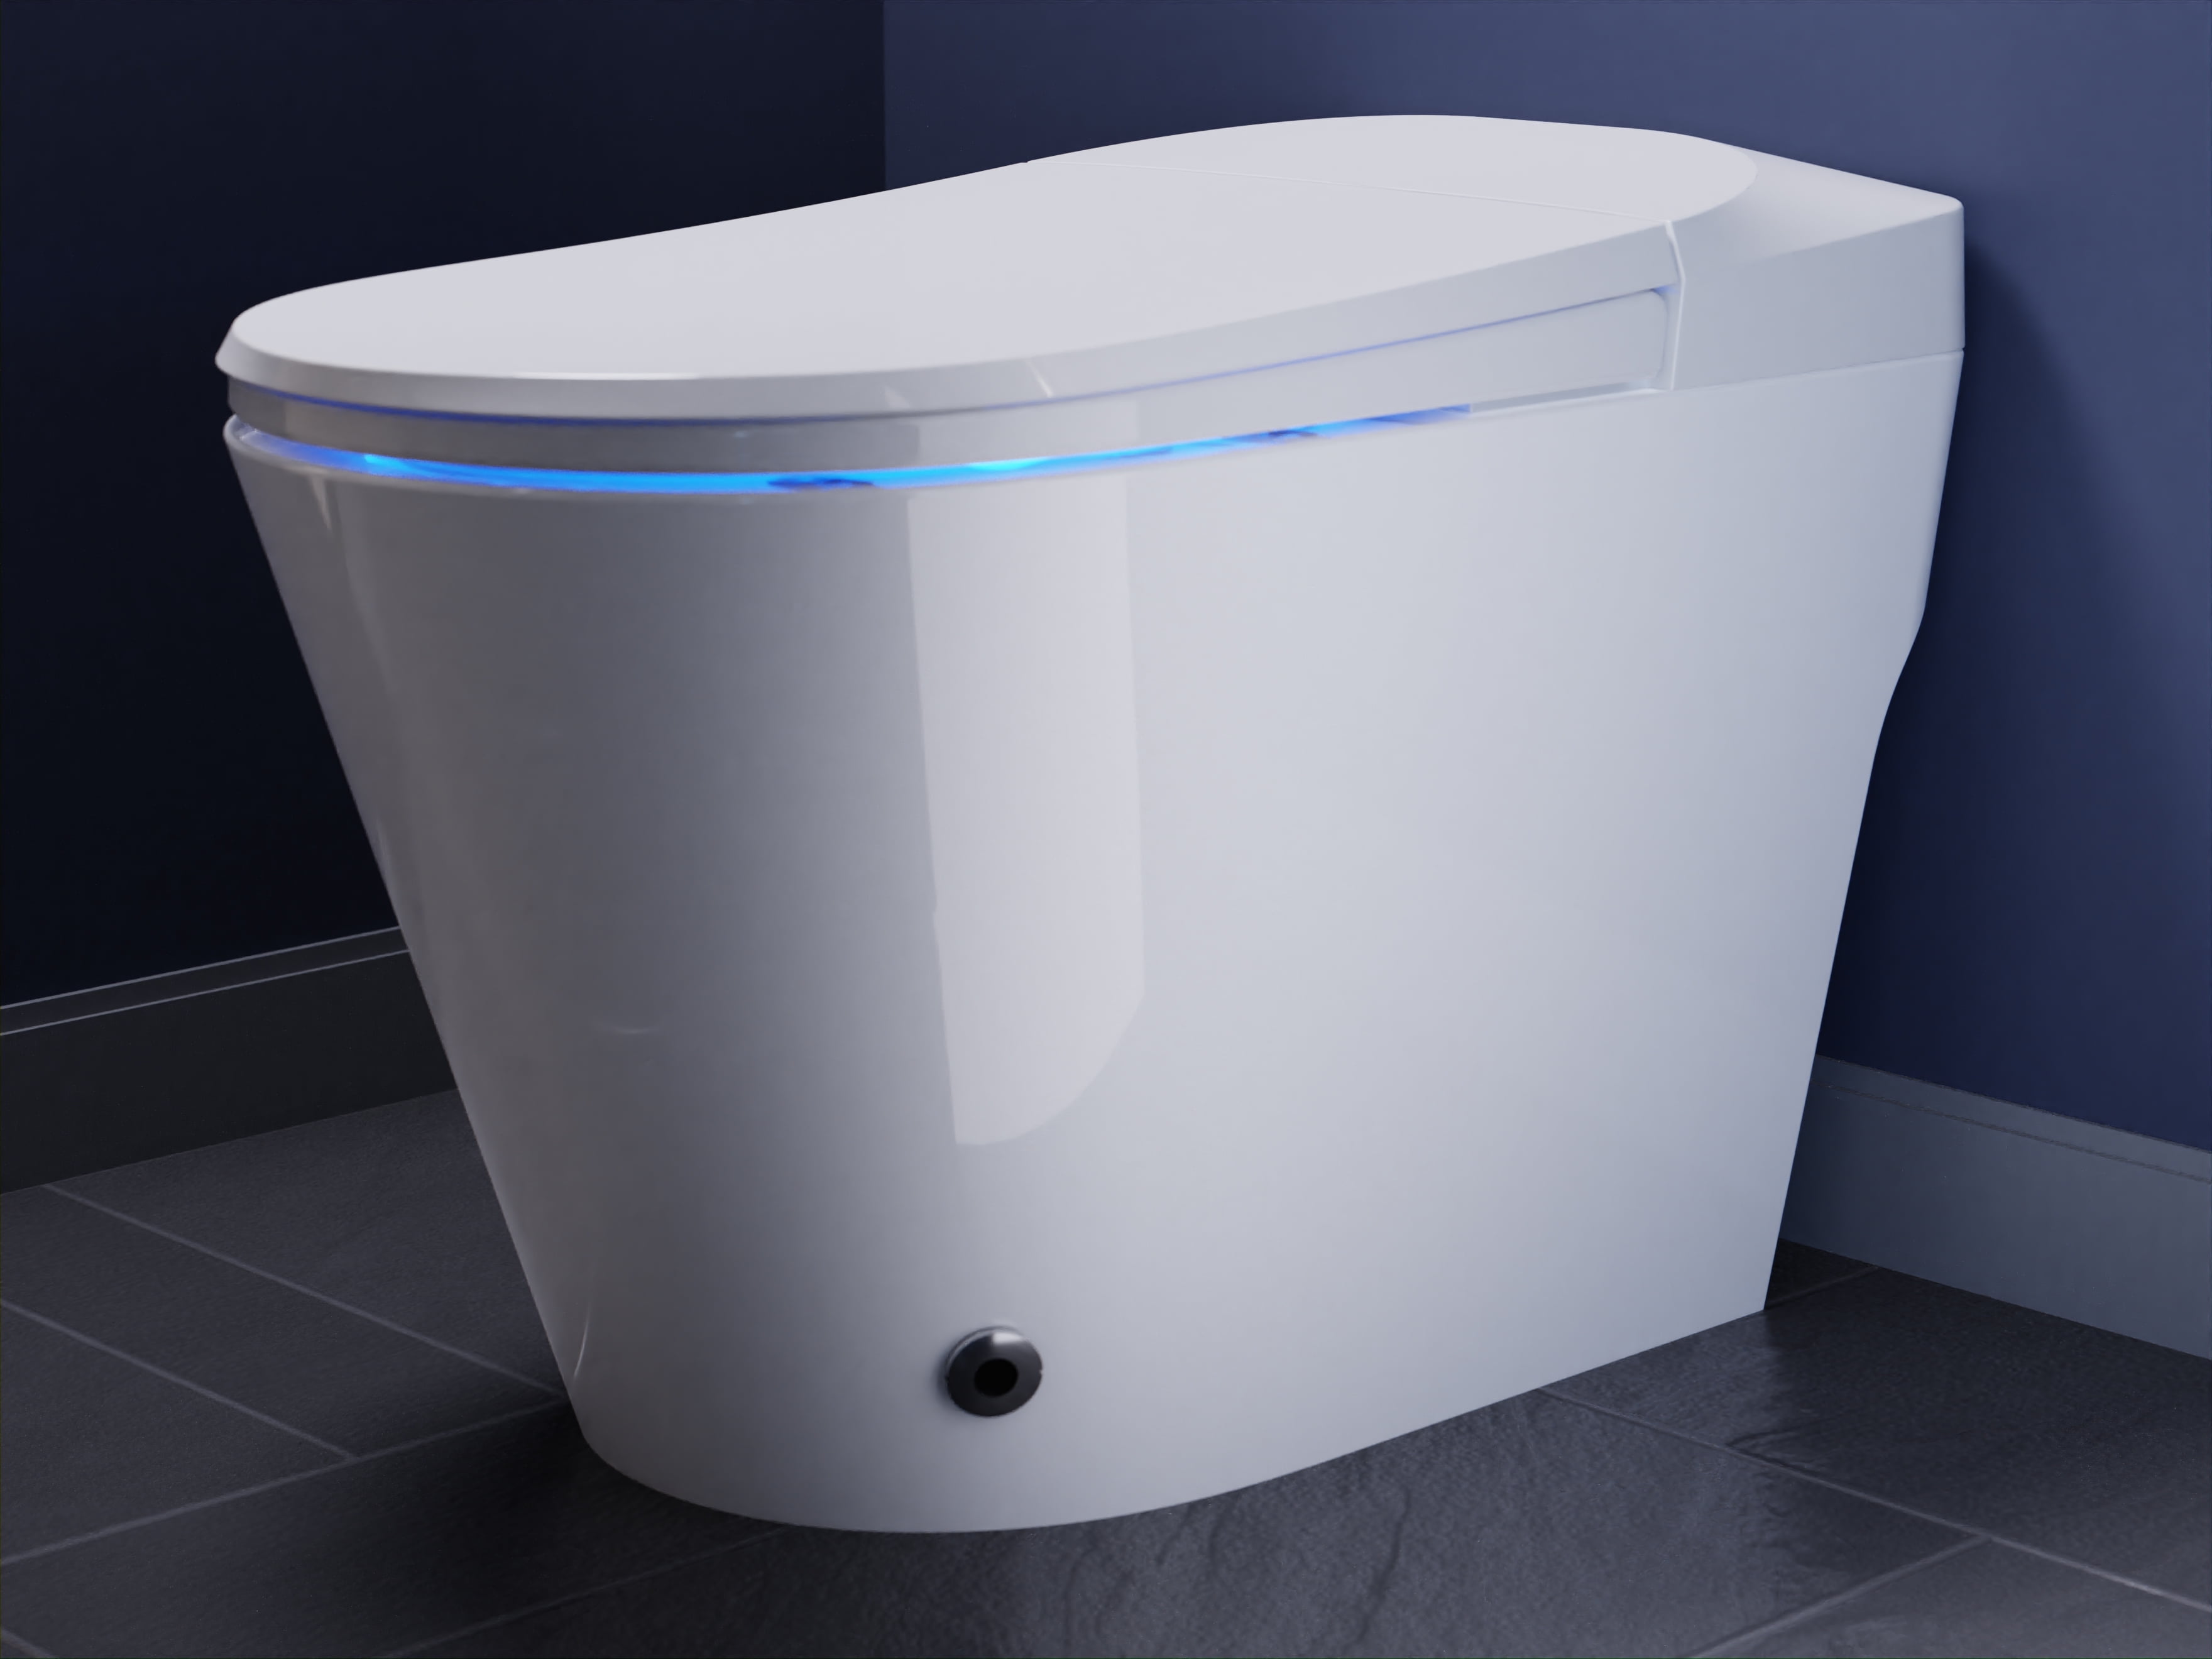 ZMJH ZMA102 Bidet Toilet Seat, Elongated Smart Unlimited Warm